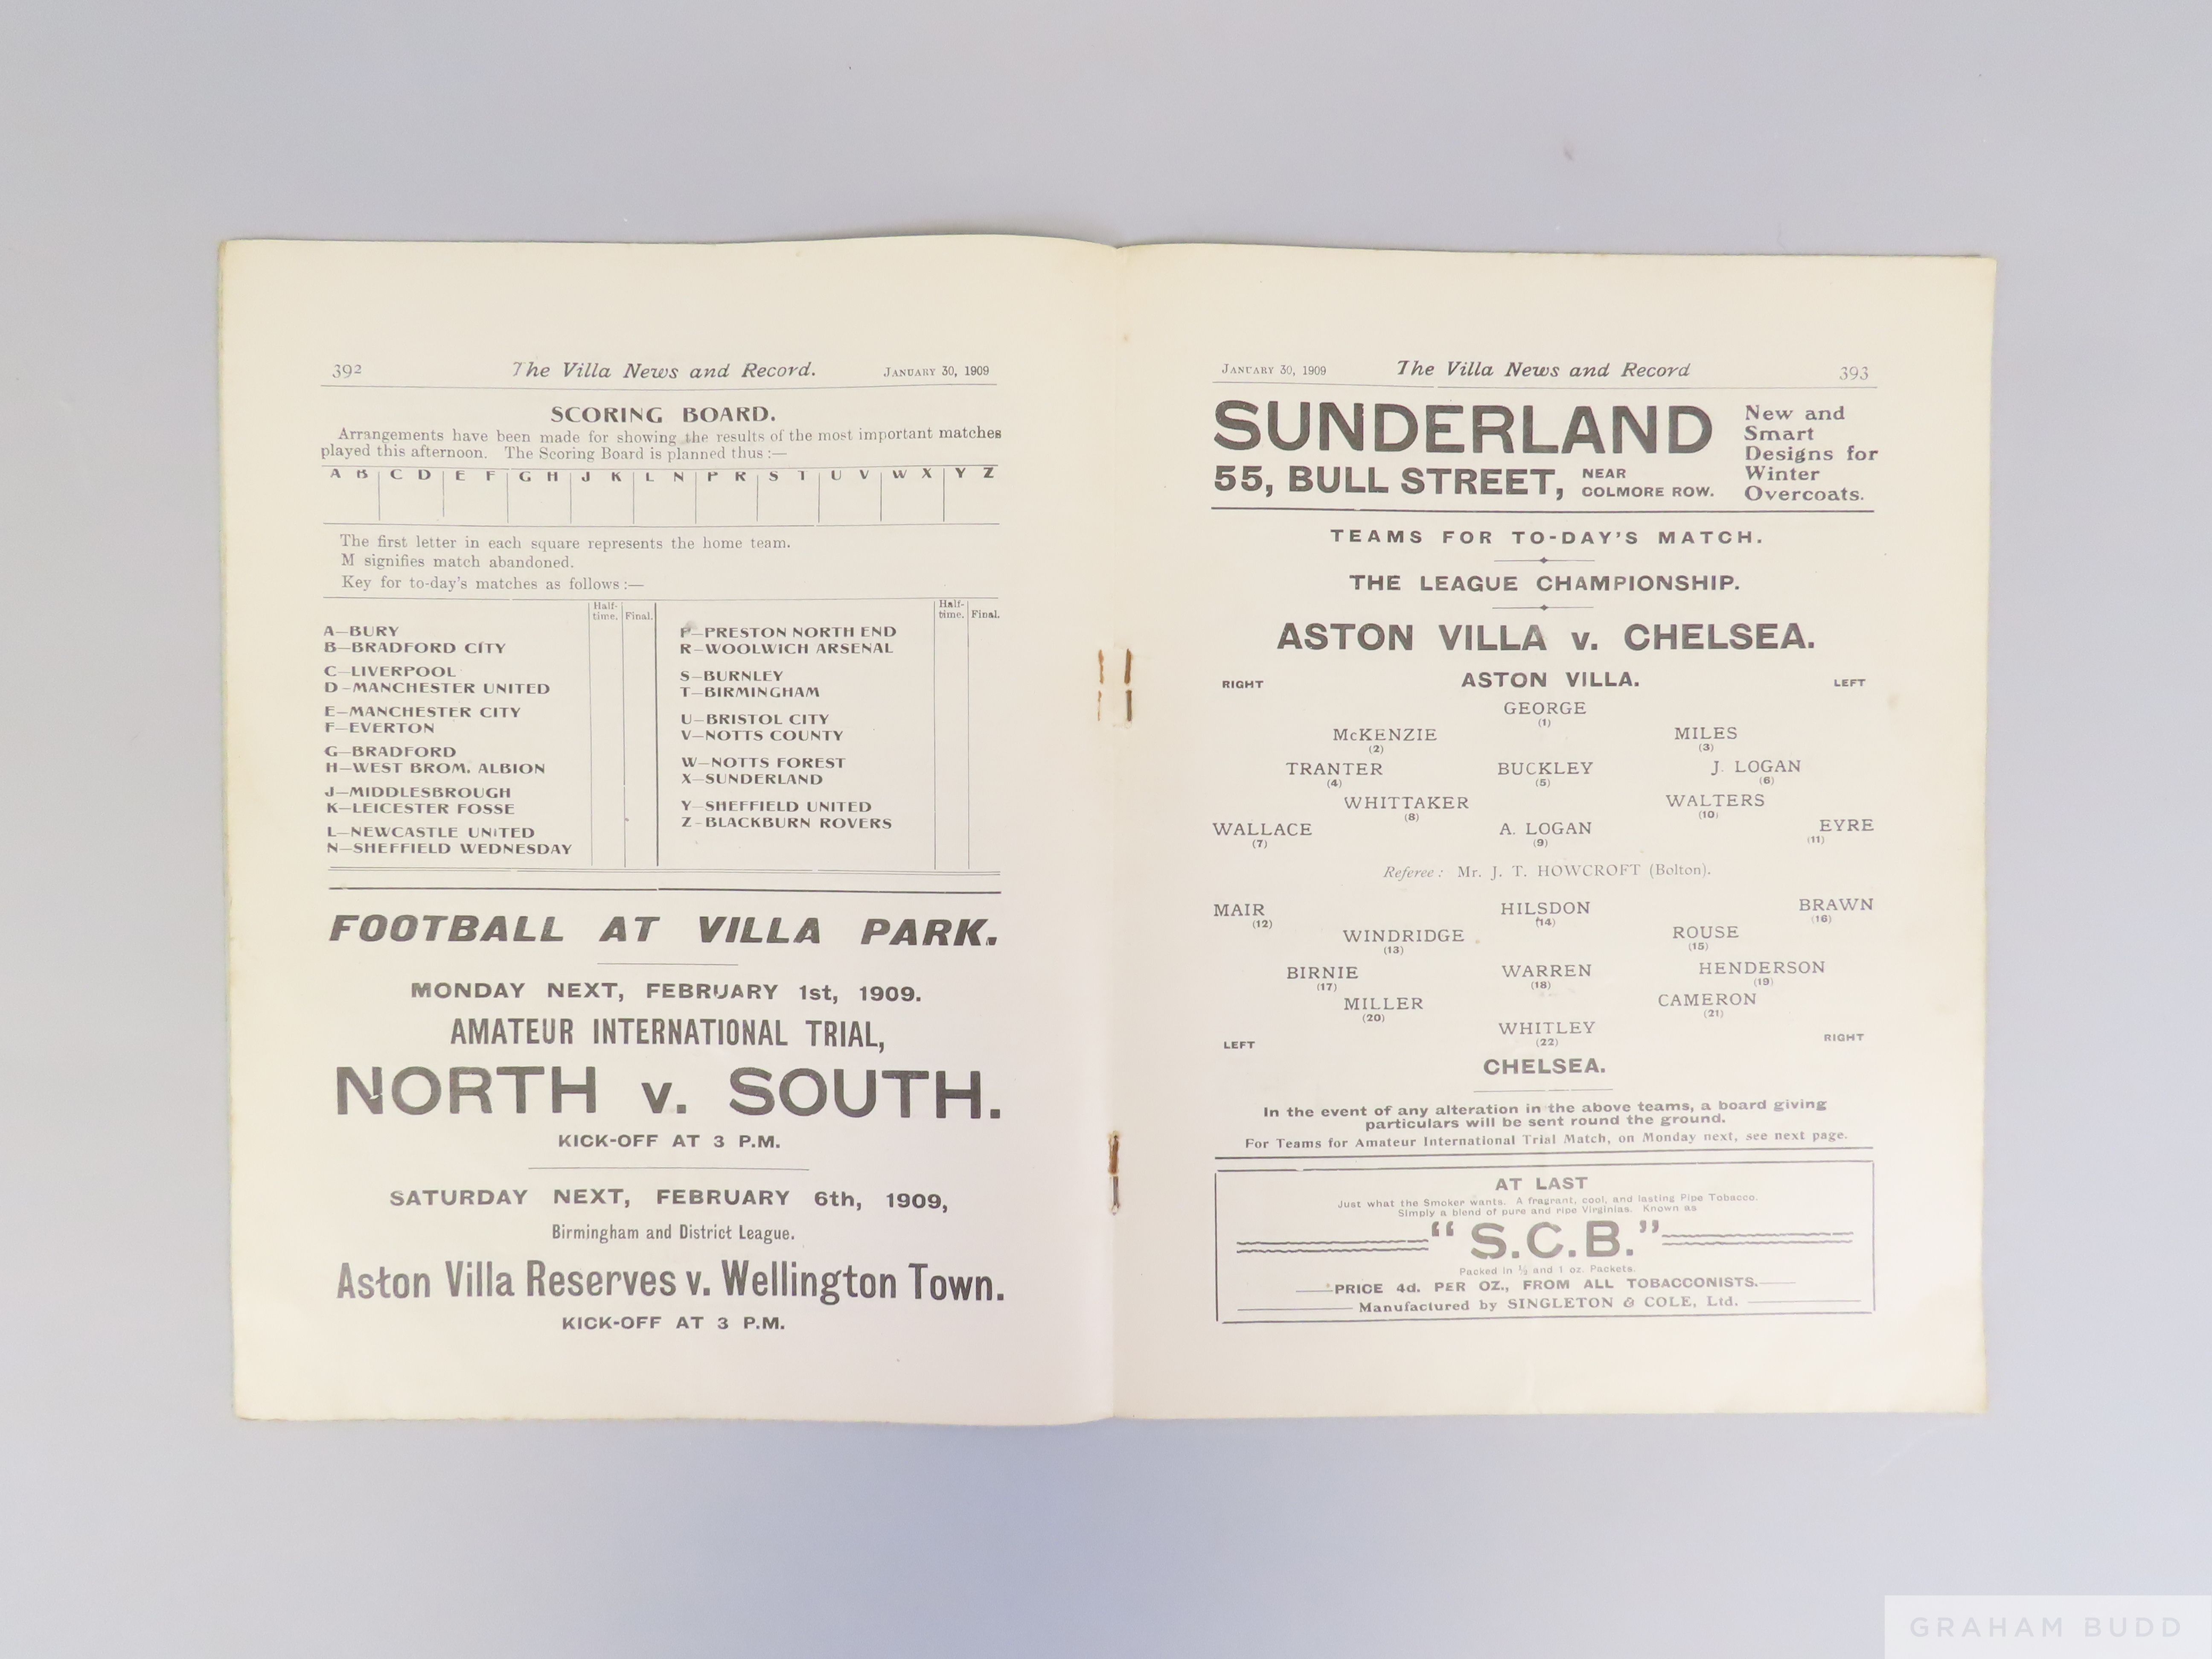 Aston Villa v. Chelsea match programme, 30th January 1909 - Image 2 of 2